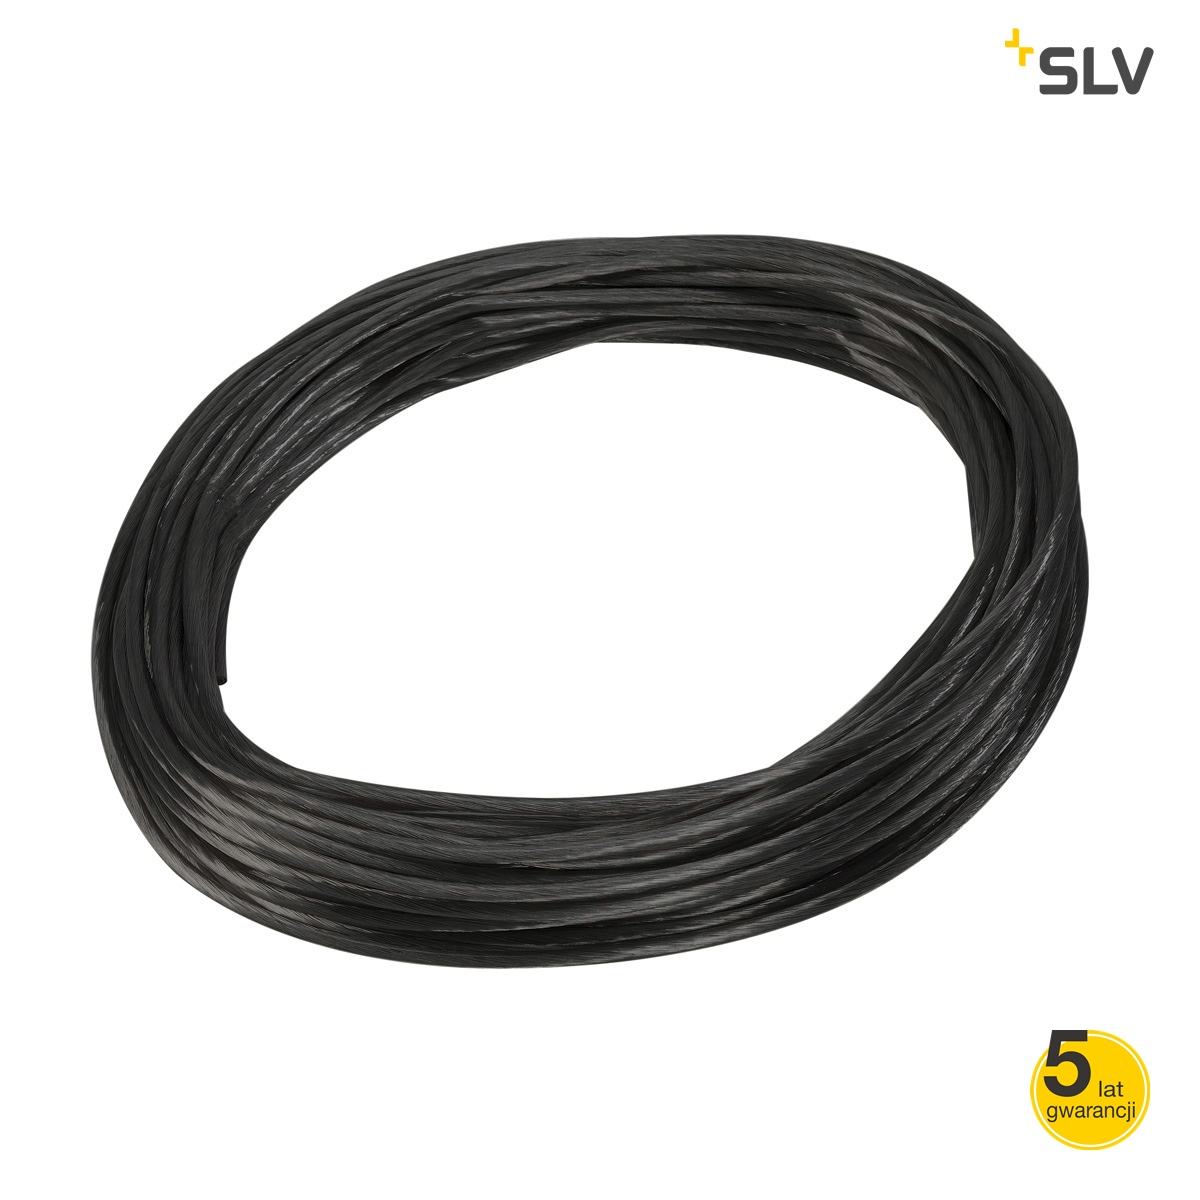 TENSEO low voltage insulated cable 2000cm 0.4cm black SLV Spotline 139030